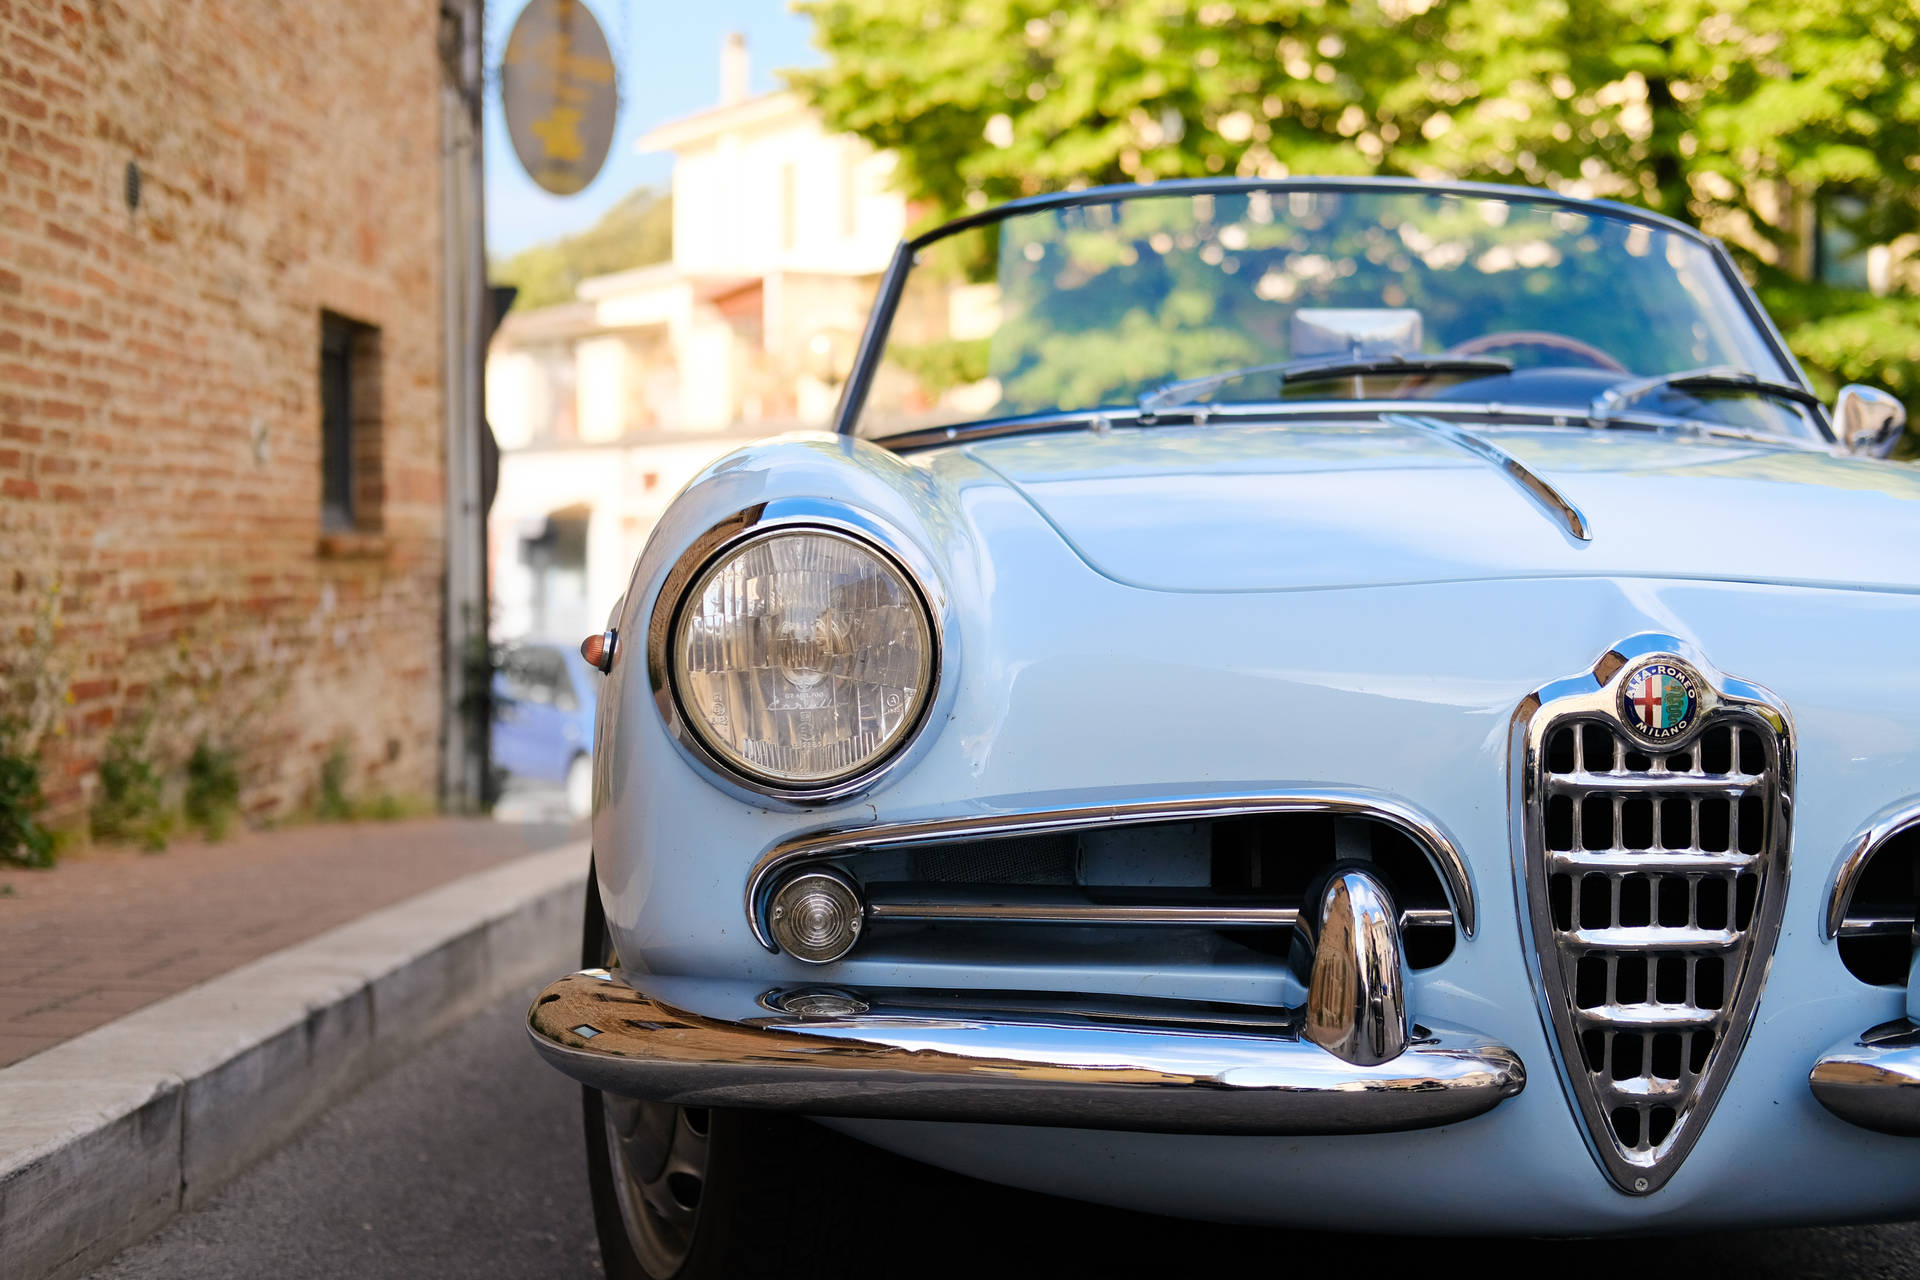 Pale blue Alfa Romeo Giulietta Spider classic car on street wallpaper.